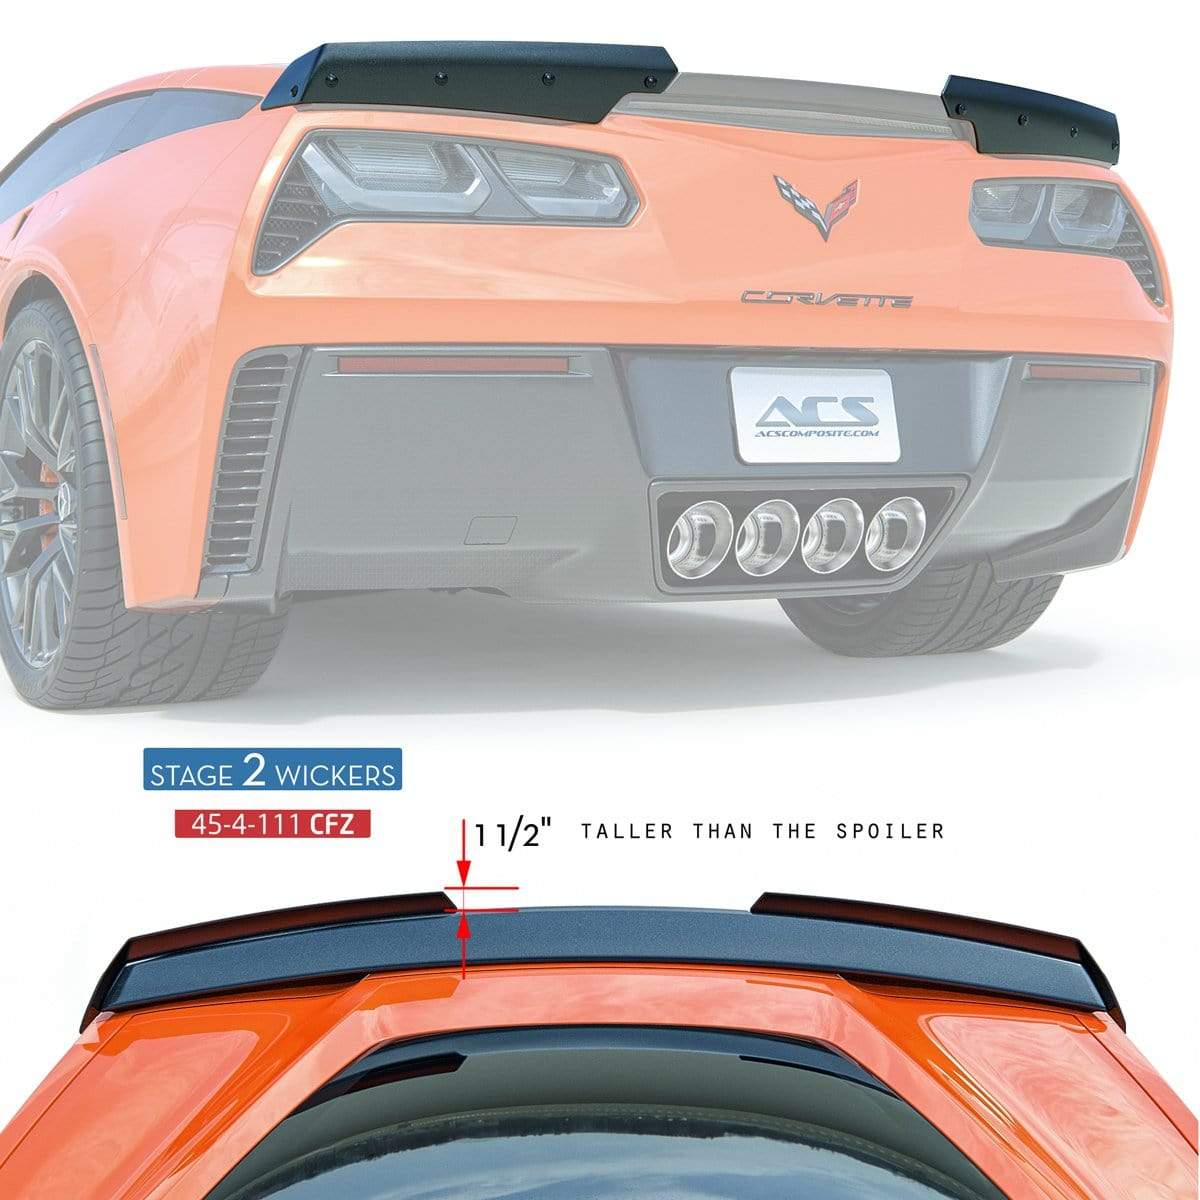 ACS Composite Stage 2 Wicker Spoiler Conversion Kit for C7 Corvette Z06 & Grand Sport [45-4-111]CFZ - Carbon Flash Black Spoiler.